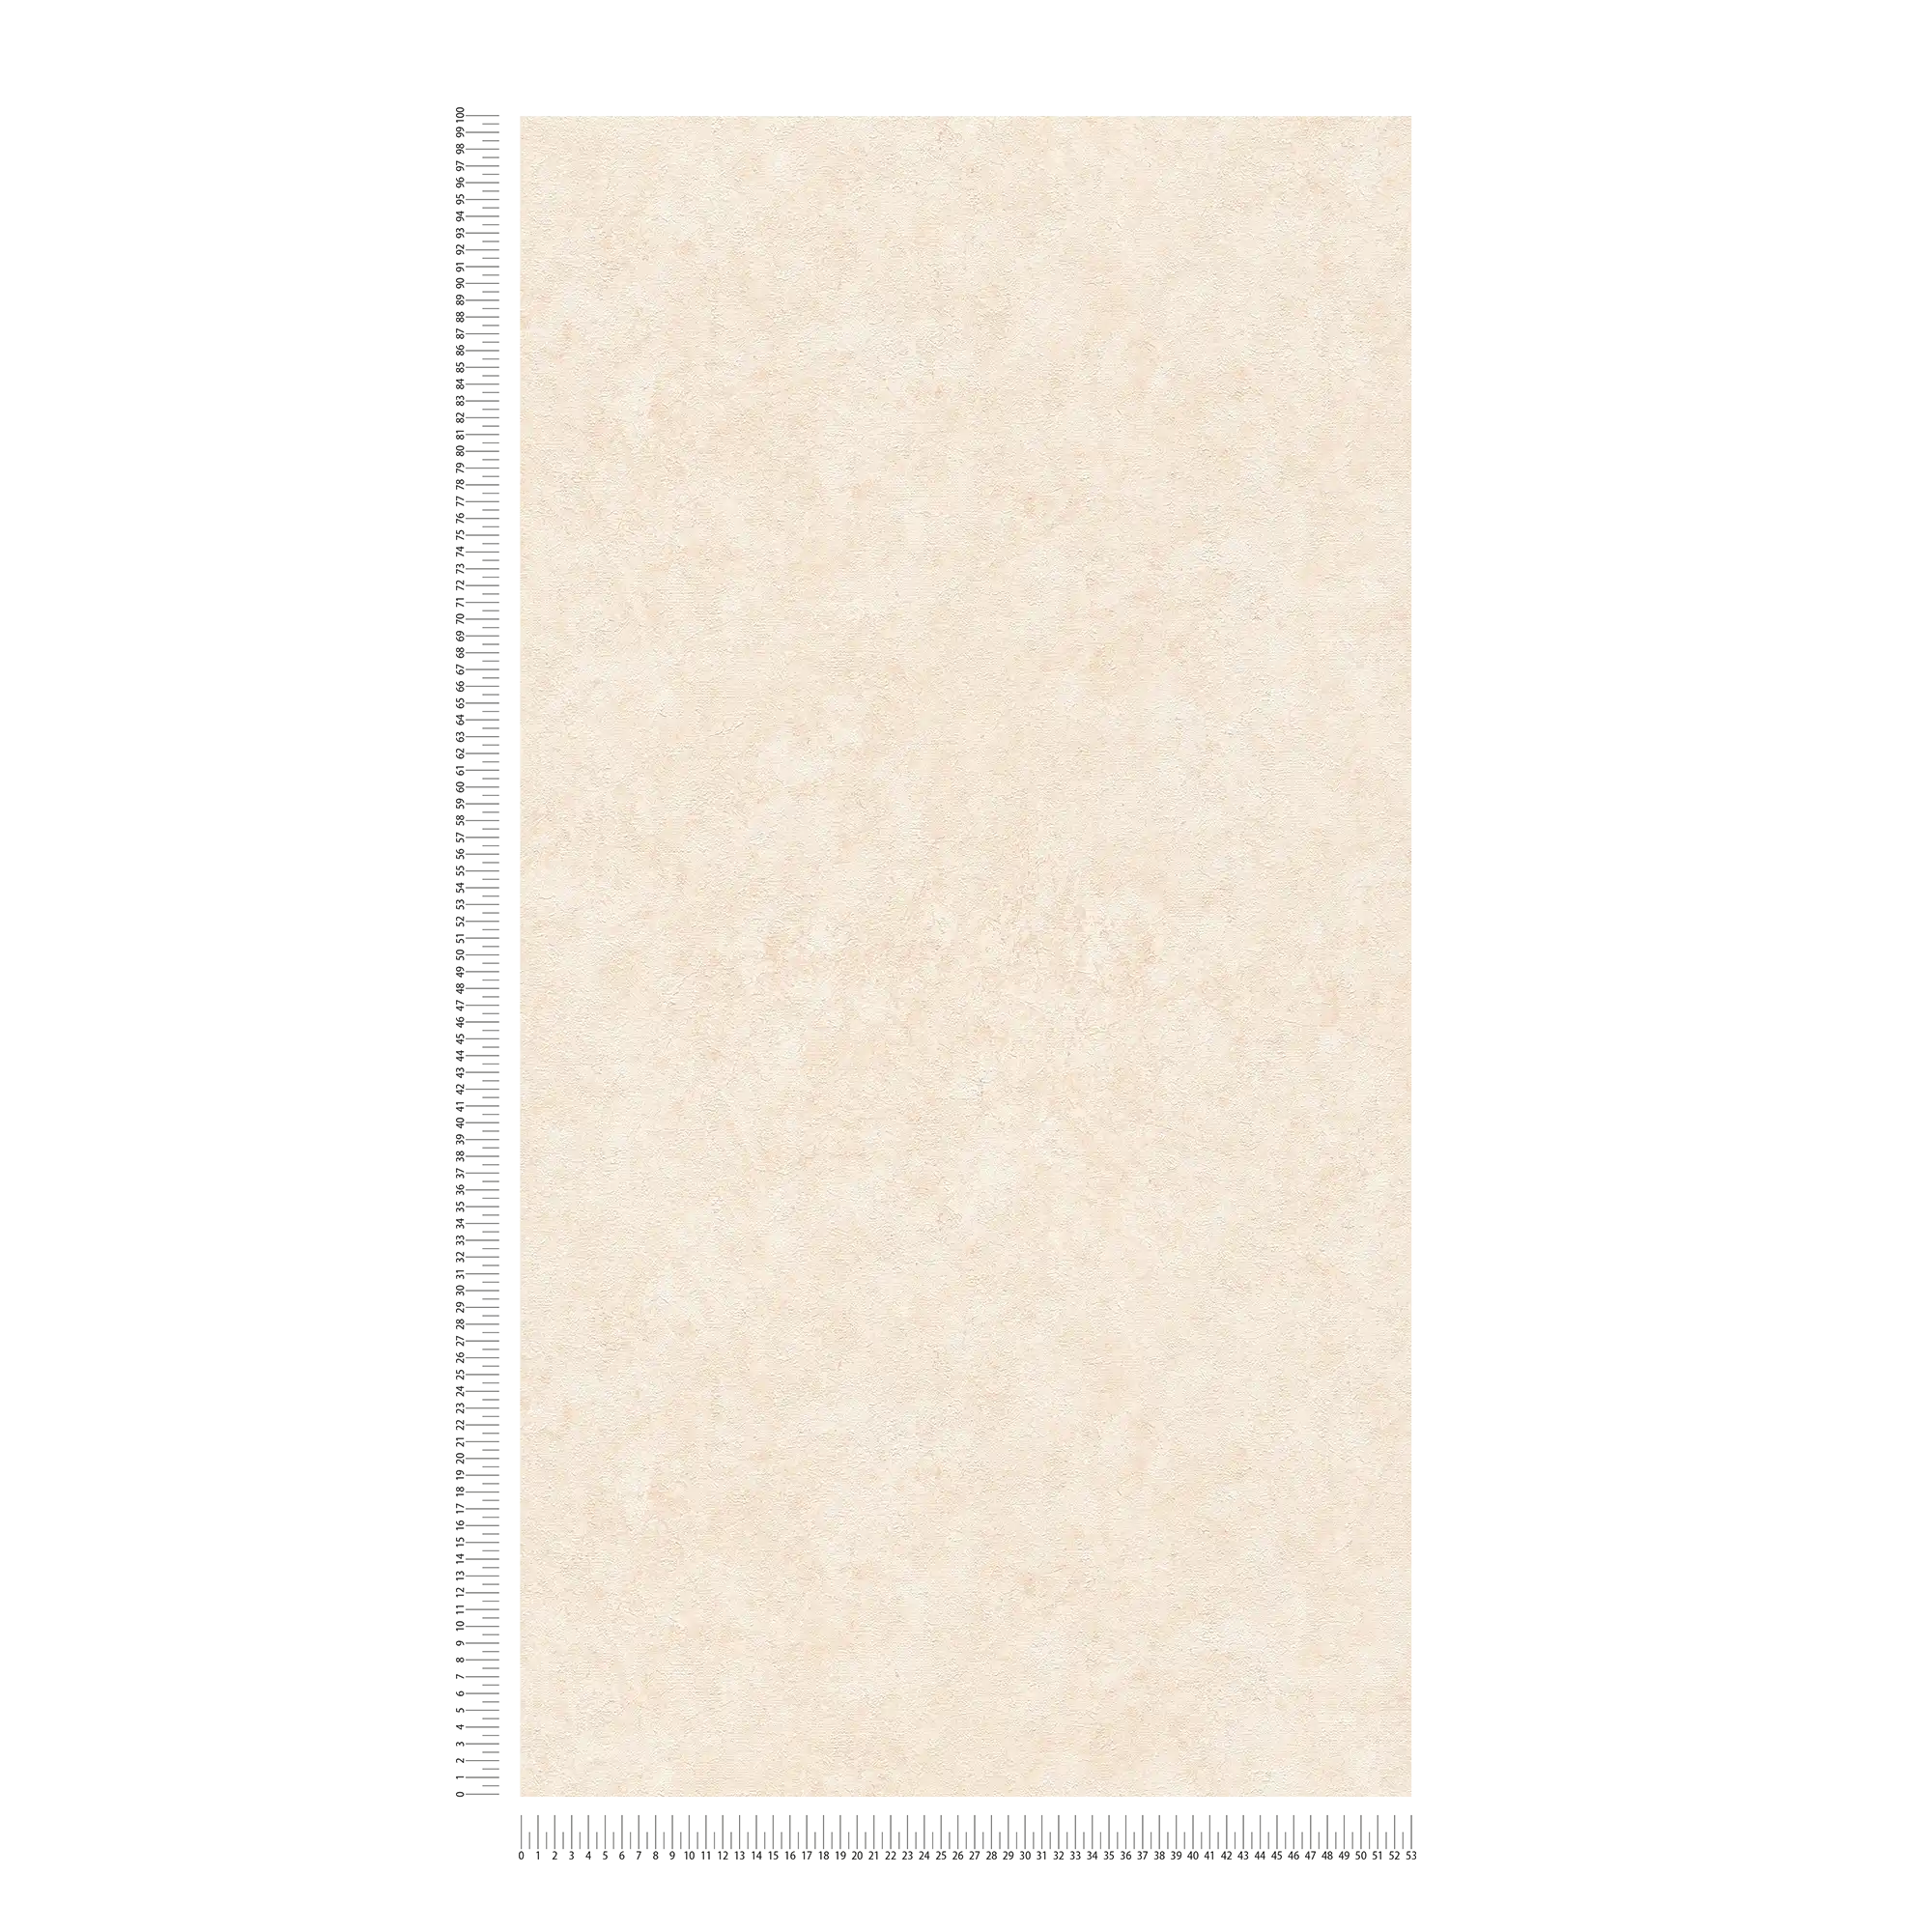             Carta da parati strutturata in tinte unite e delicate - crema, beige
        